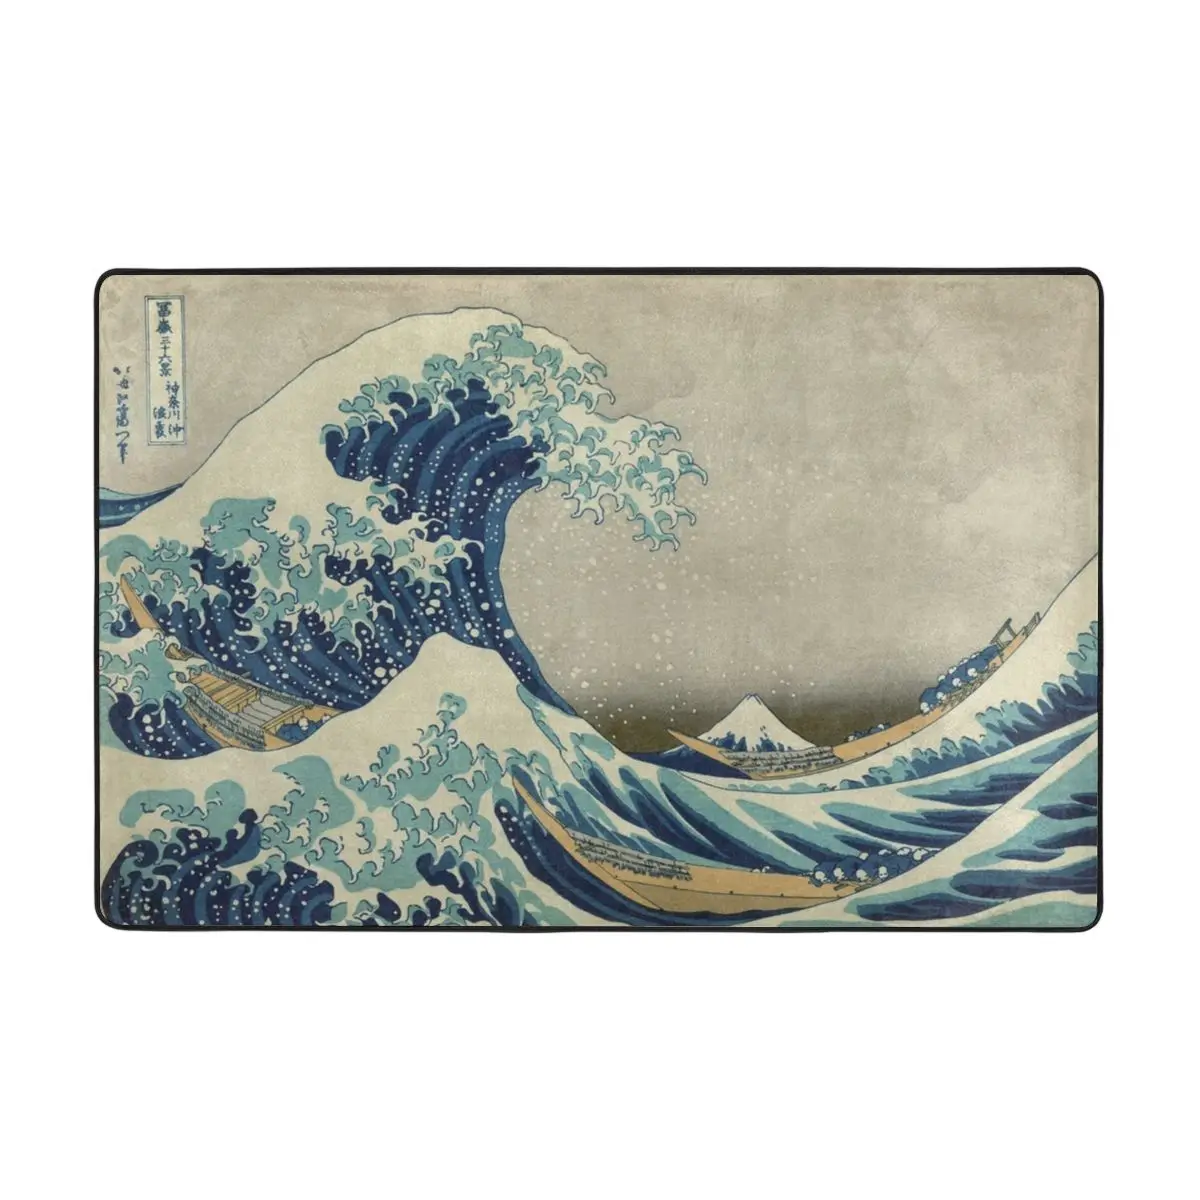 

The Great Wave Off Kanagawa Doormat Carpet Mat Rug Polyester Non-Slip Floor Decor Bath Bathroom Kitchen Living Room 60x90